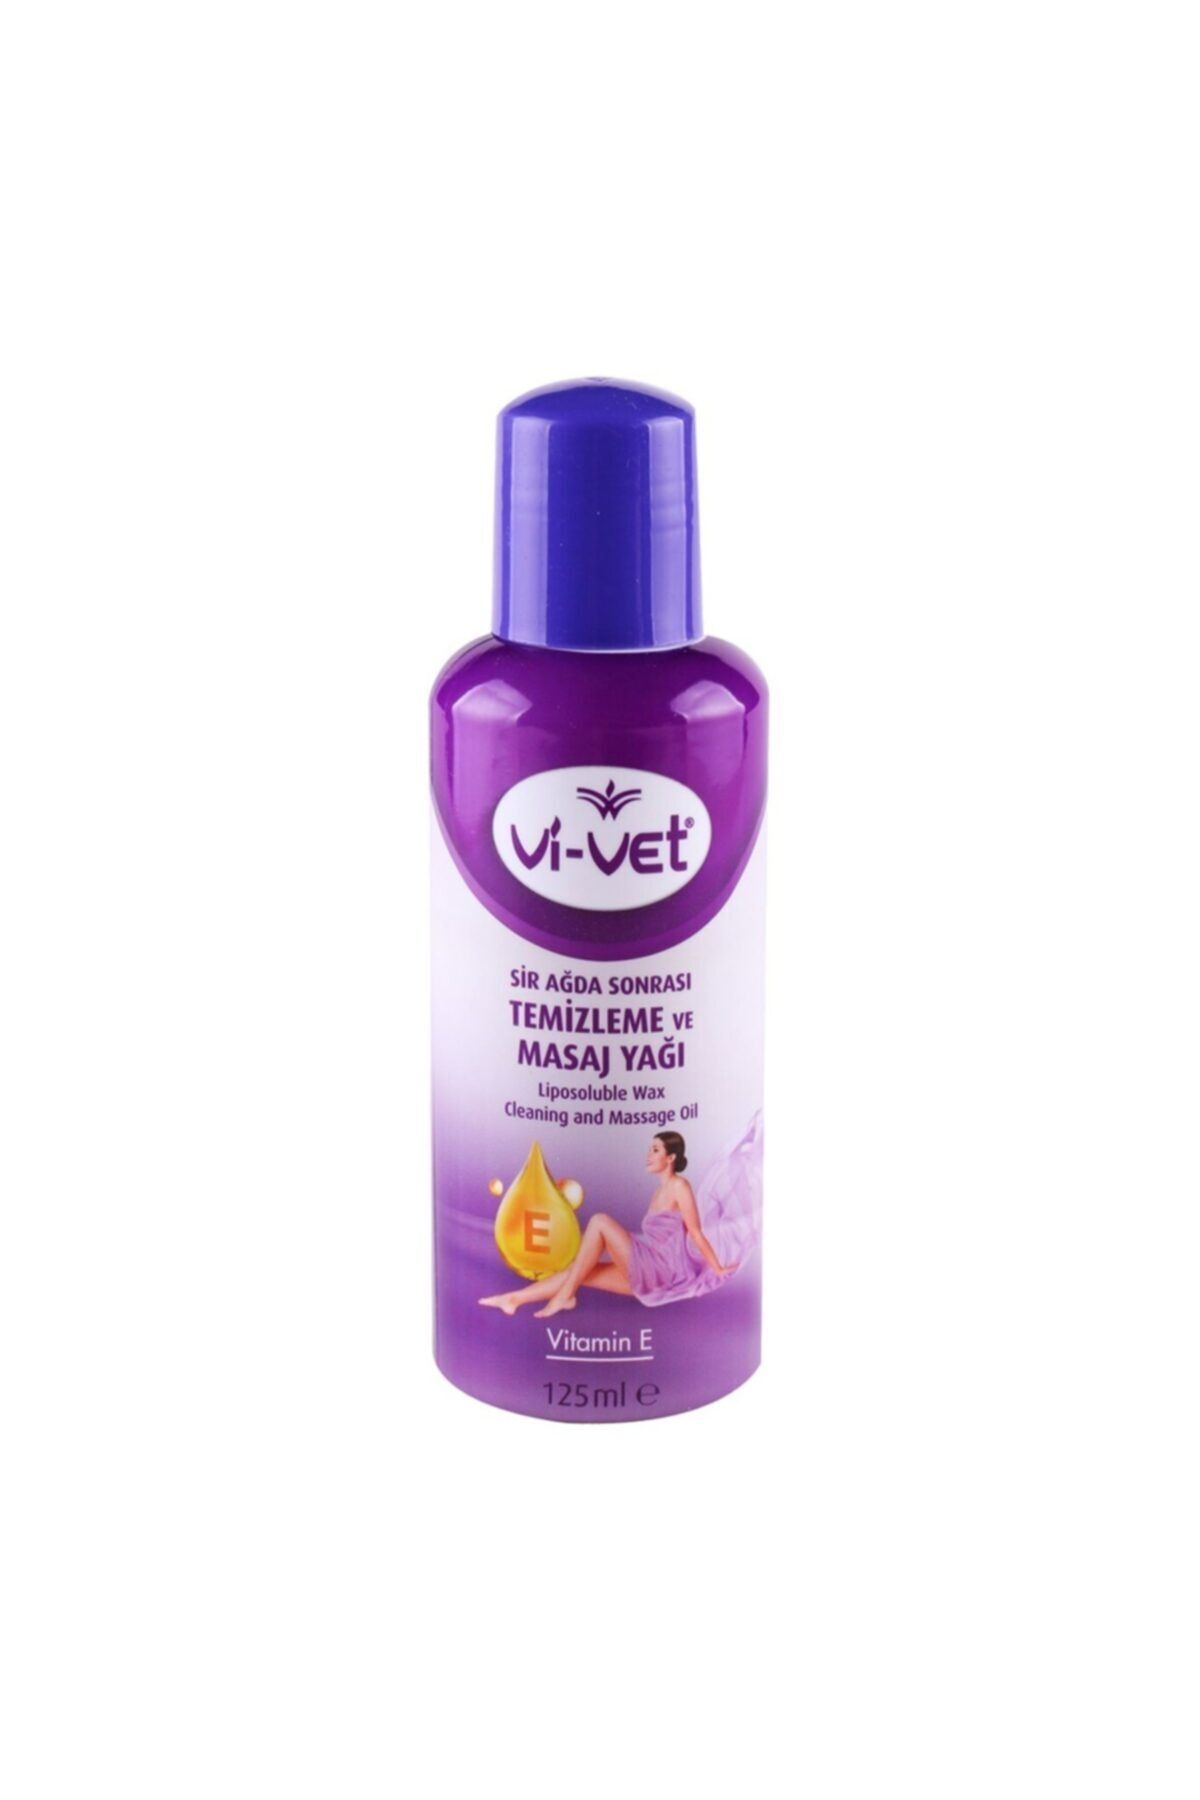 Vi vet Vivet Ağda Sonrası Temizleme Ve Masaj Yağı Vitamin E 125 ml